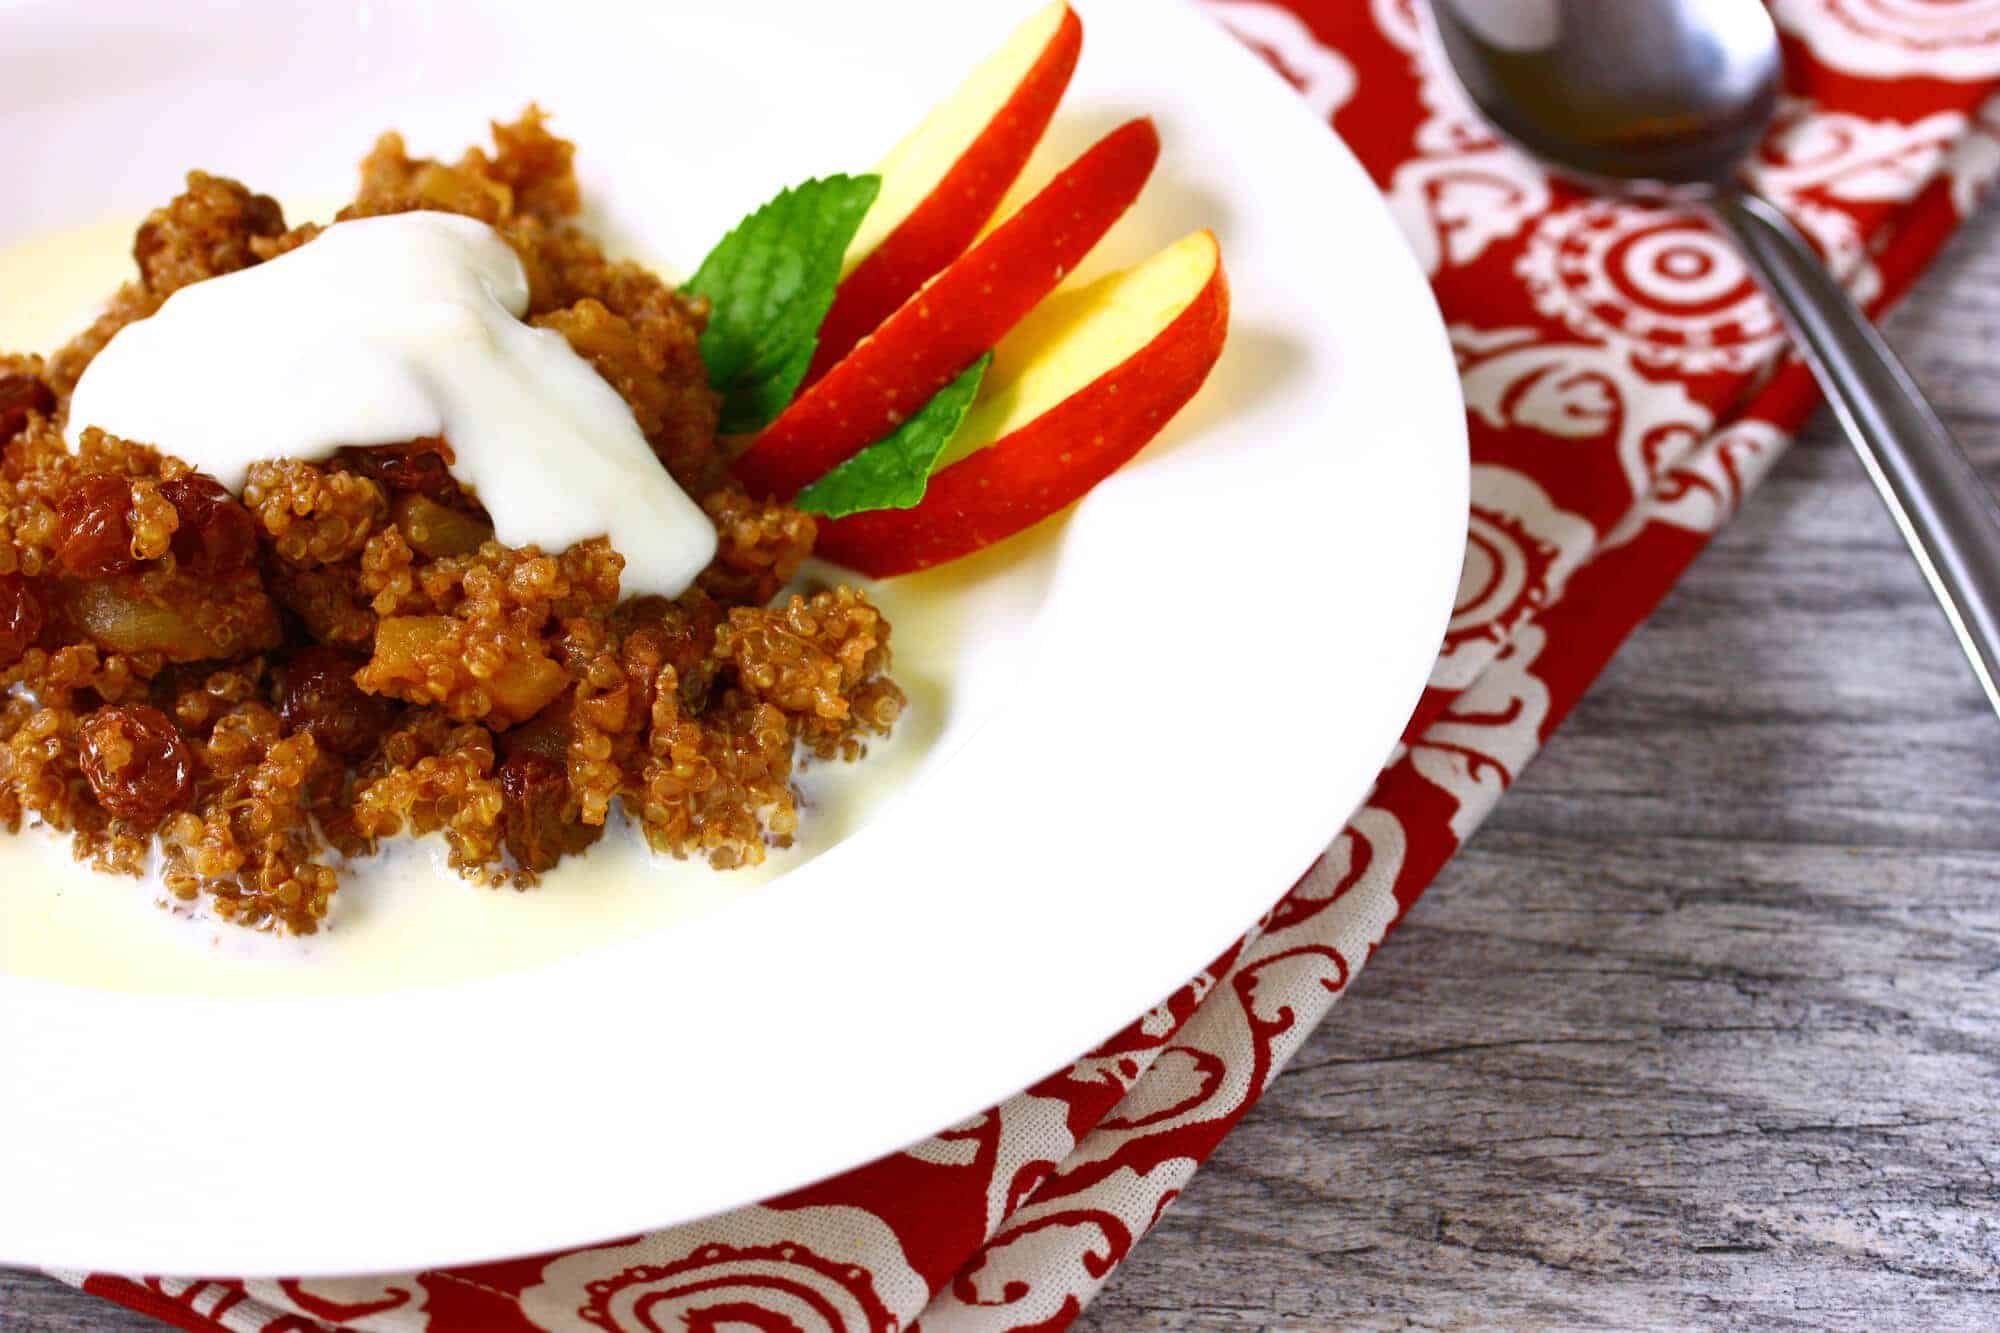 apple cinnamon quinoa cereal breakfast hot recipe raisins nuts gluten free vegan vegetarian dairy free healthy protein